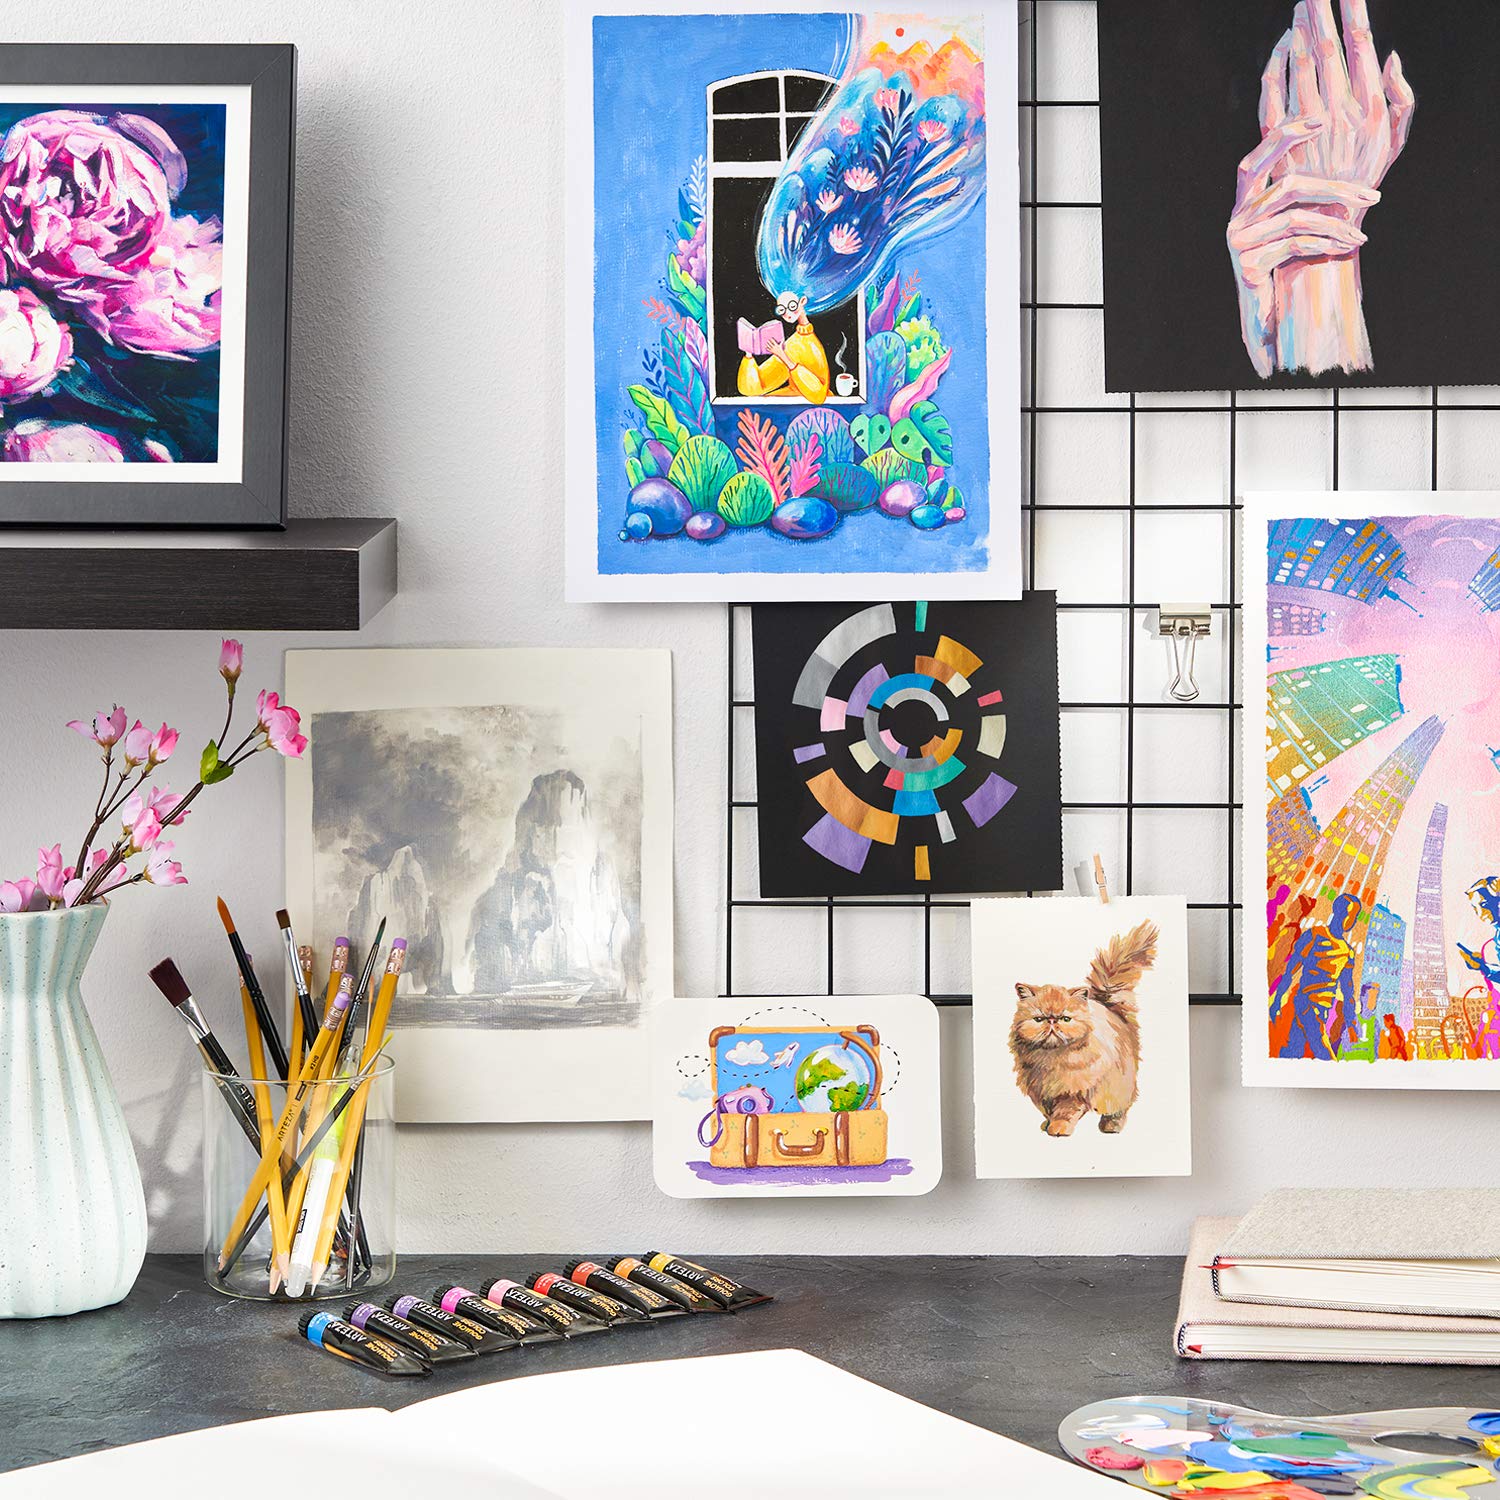 ARTEZA Gouache Paint Set, Set of 60 Colors in 12ml/0.4 US fl oz Tubes, Premium Gouache Artist Paint for Professionals & Students, Ideal for Canvas and Paper, Complete Art Supplies for Vibrant Creations